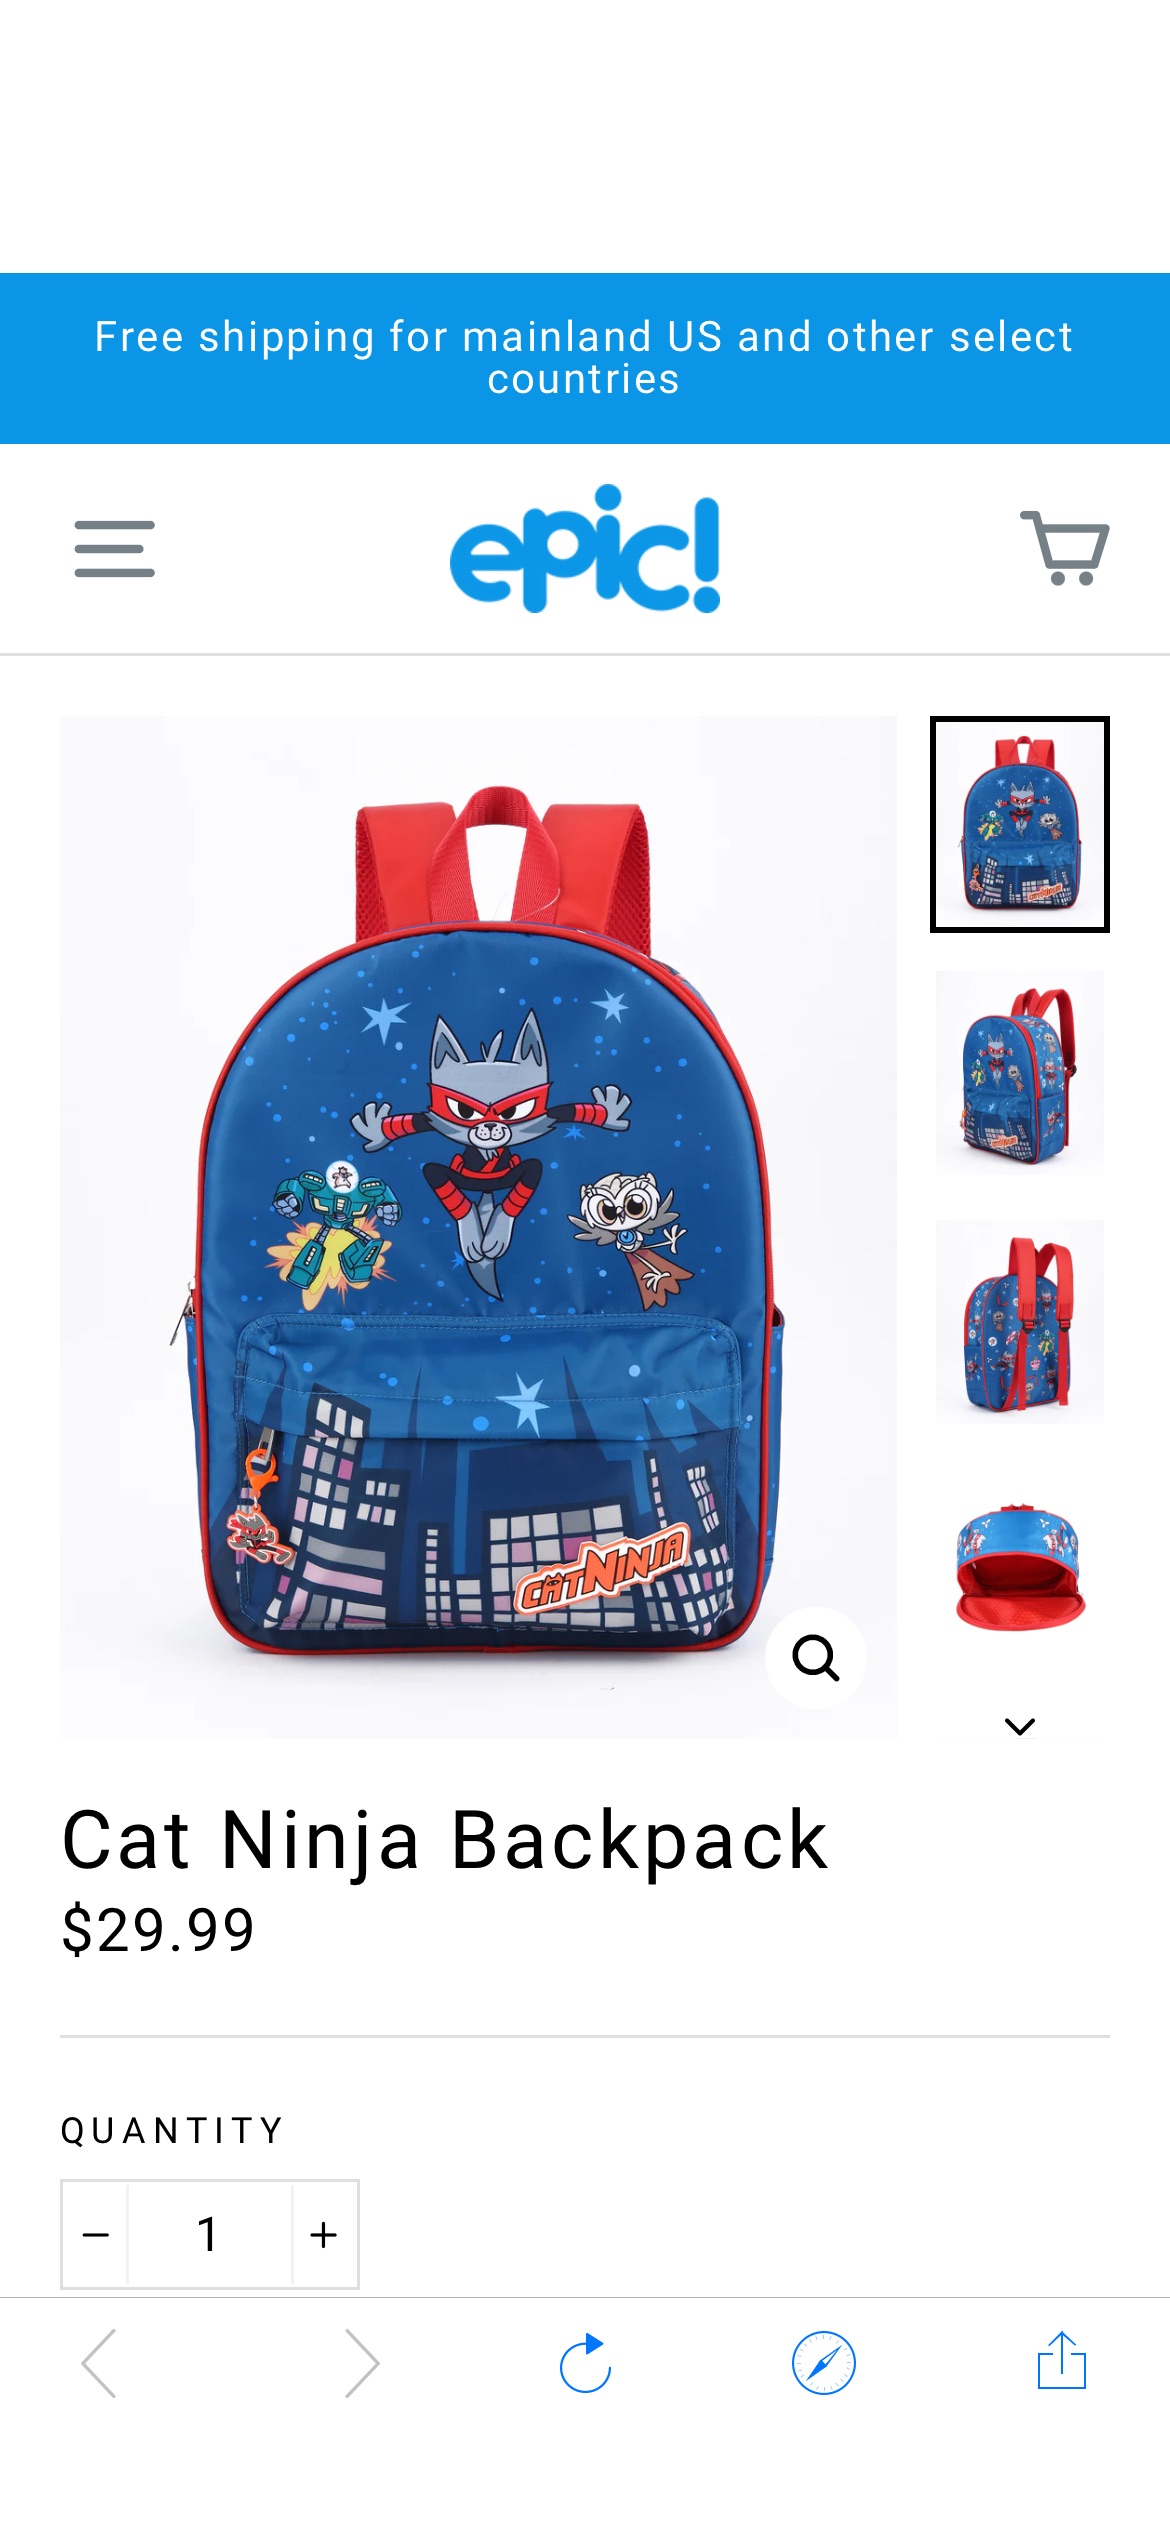 Cat Ninja Backpack – Get Epic